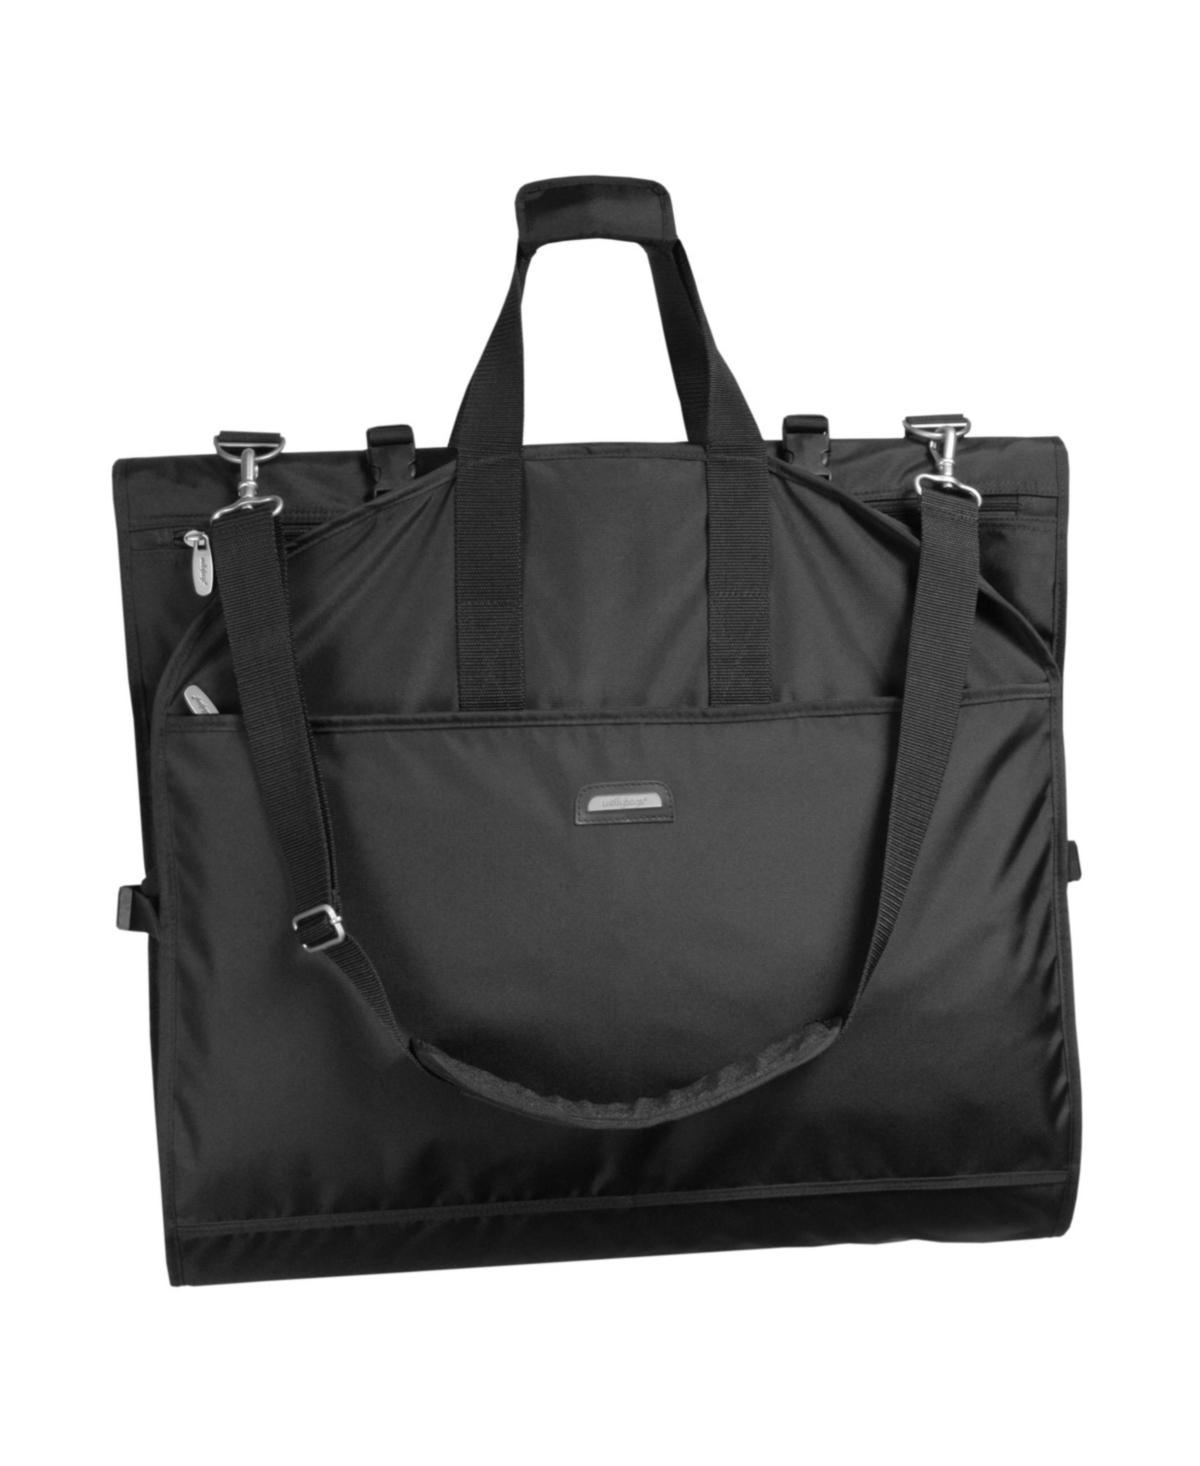 66" Premium Tri-Fold Carry On Destination Wedding Gown Travel Bag with Pockets - Black